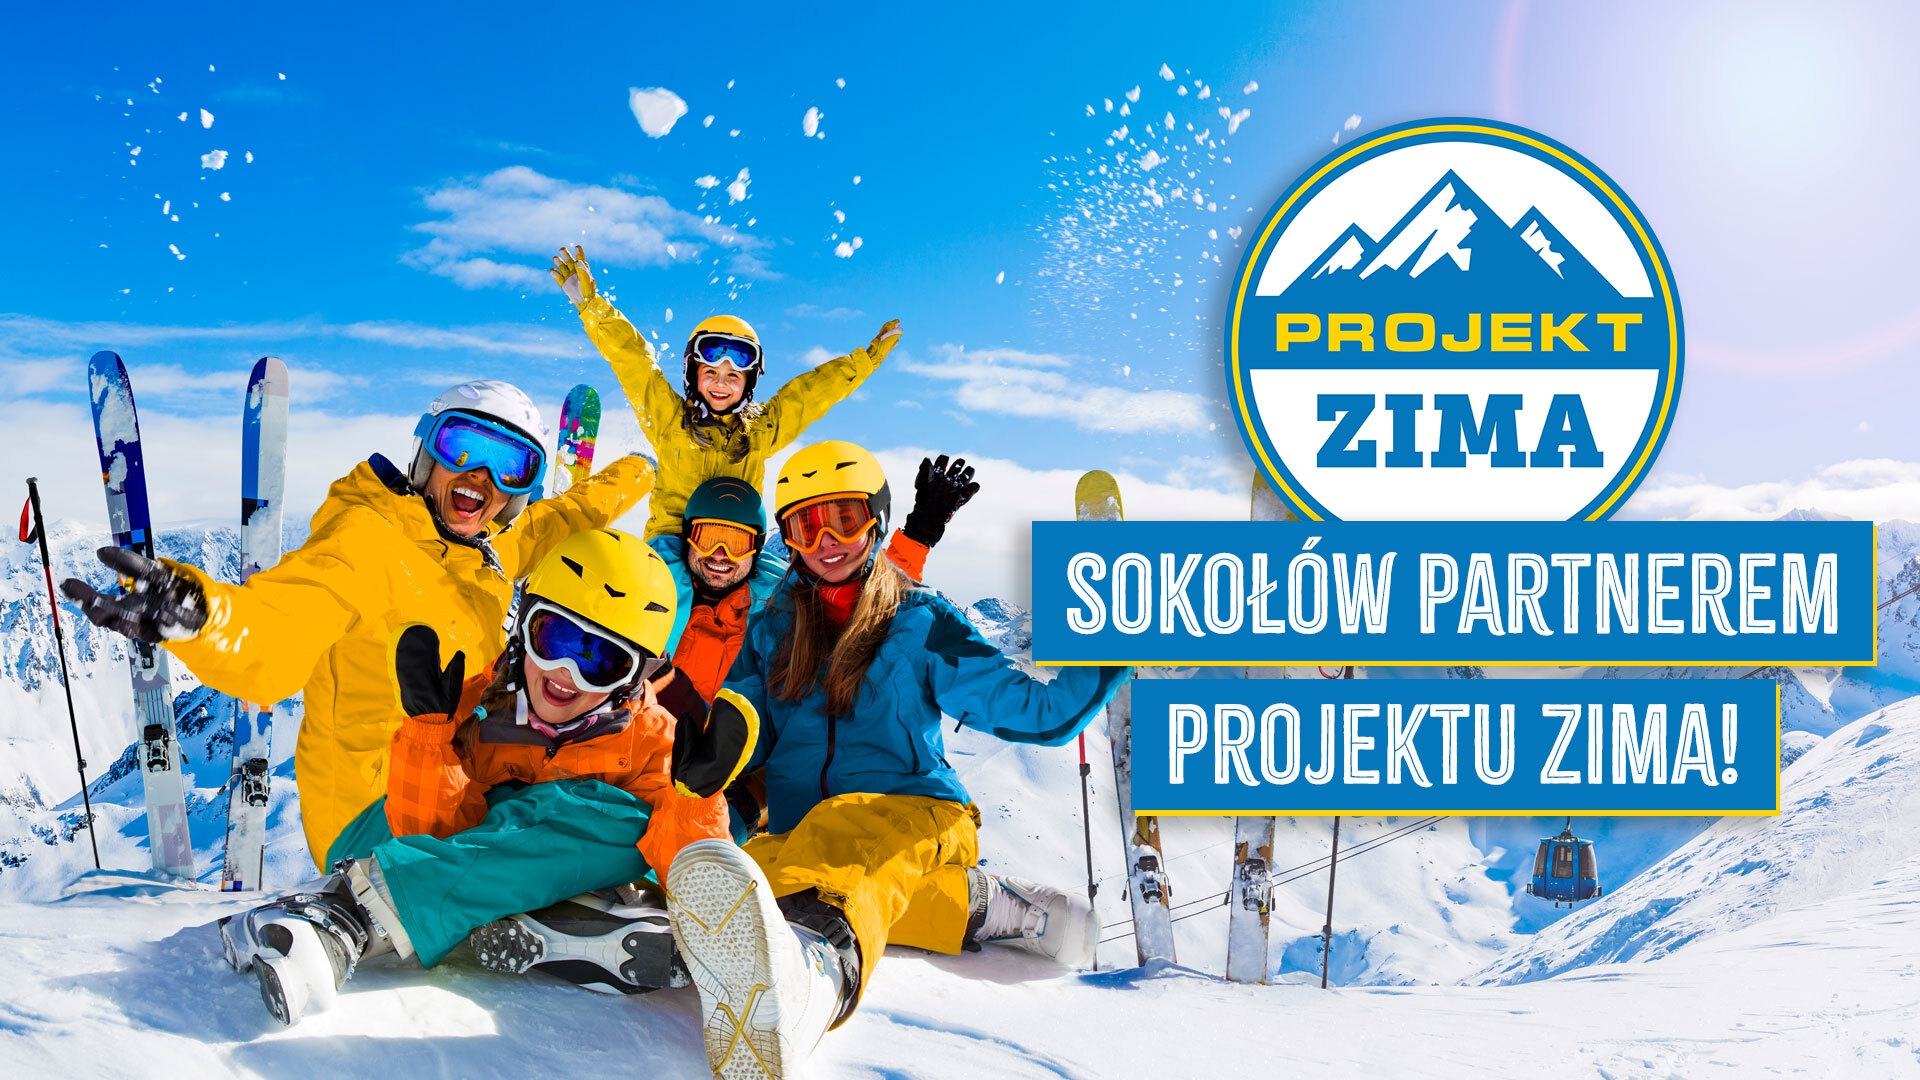 Sokołów a Partner of Projekt Zima!